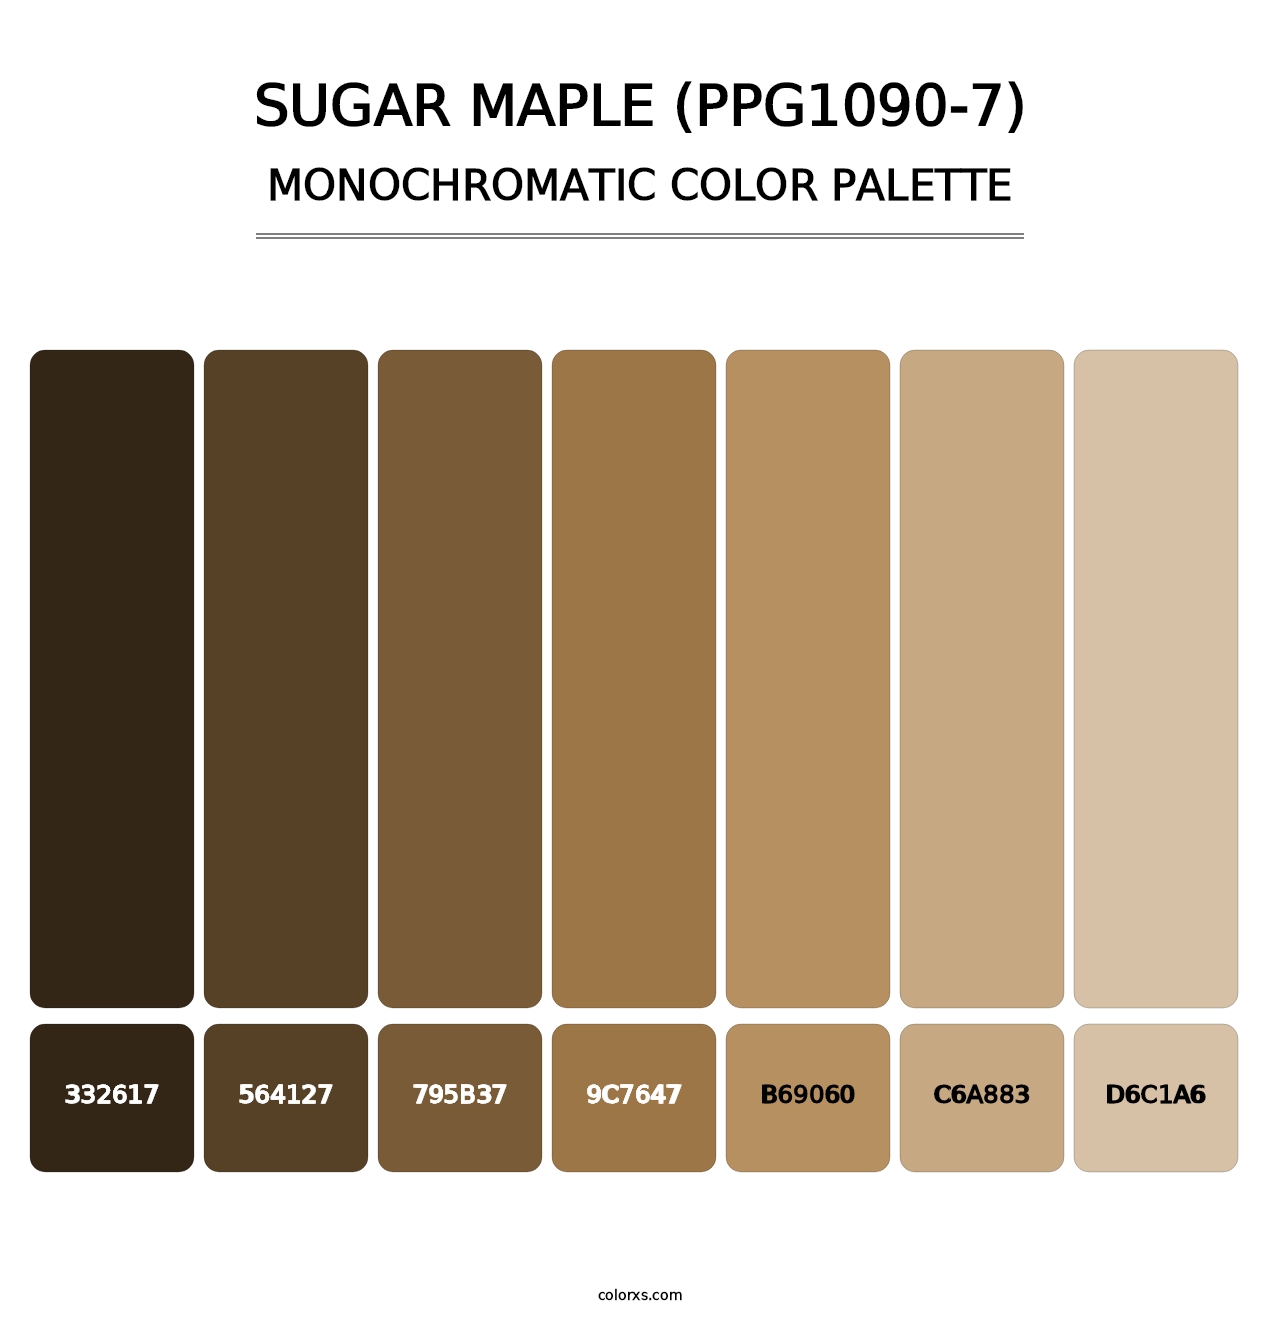 Sugar Maple (PPG1090-7) - Monochromatic Color Palette